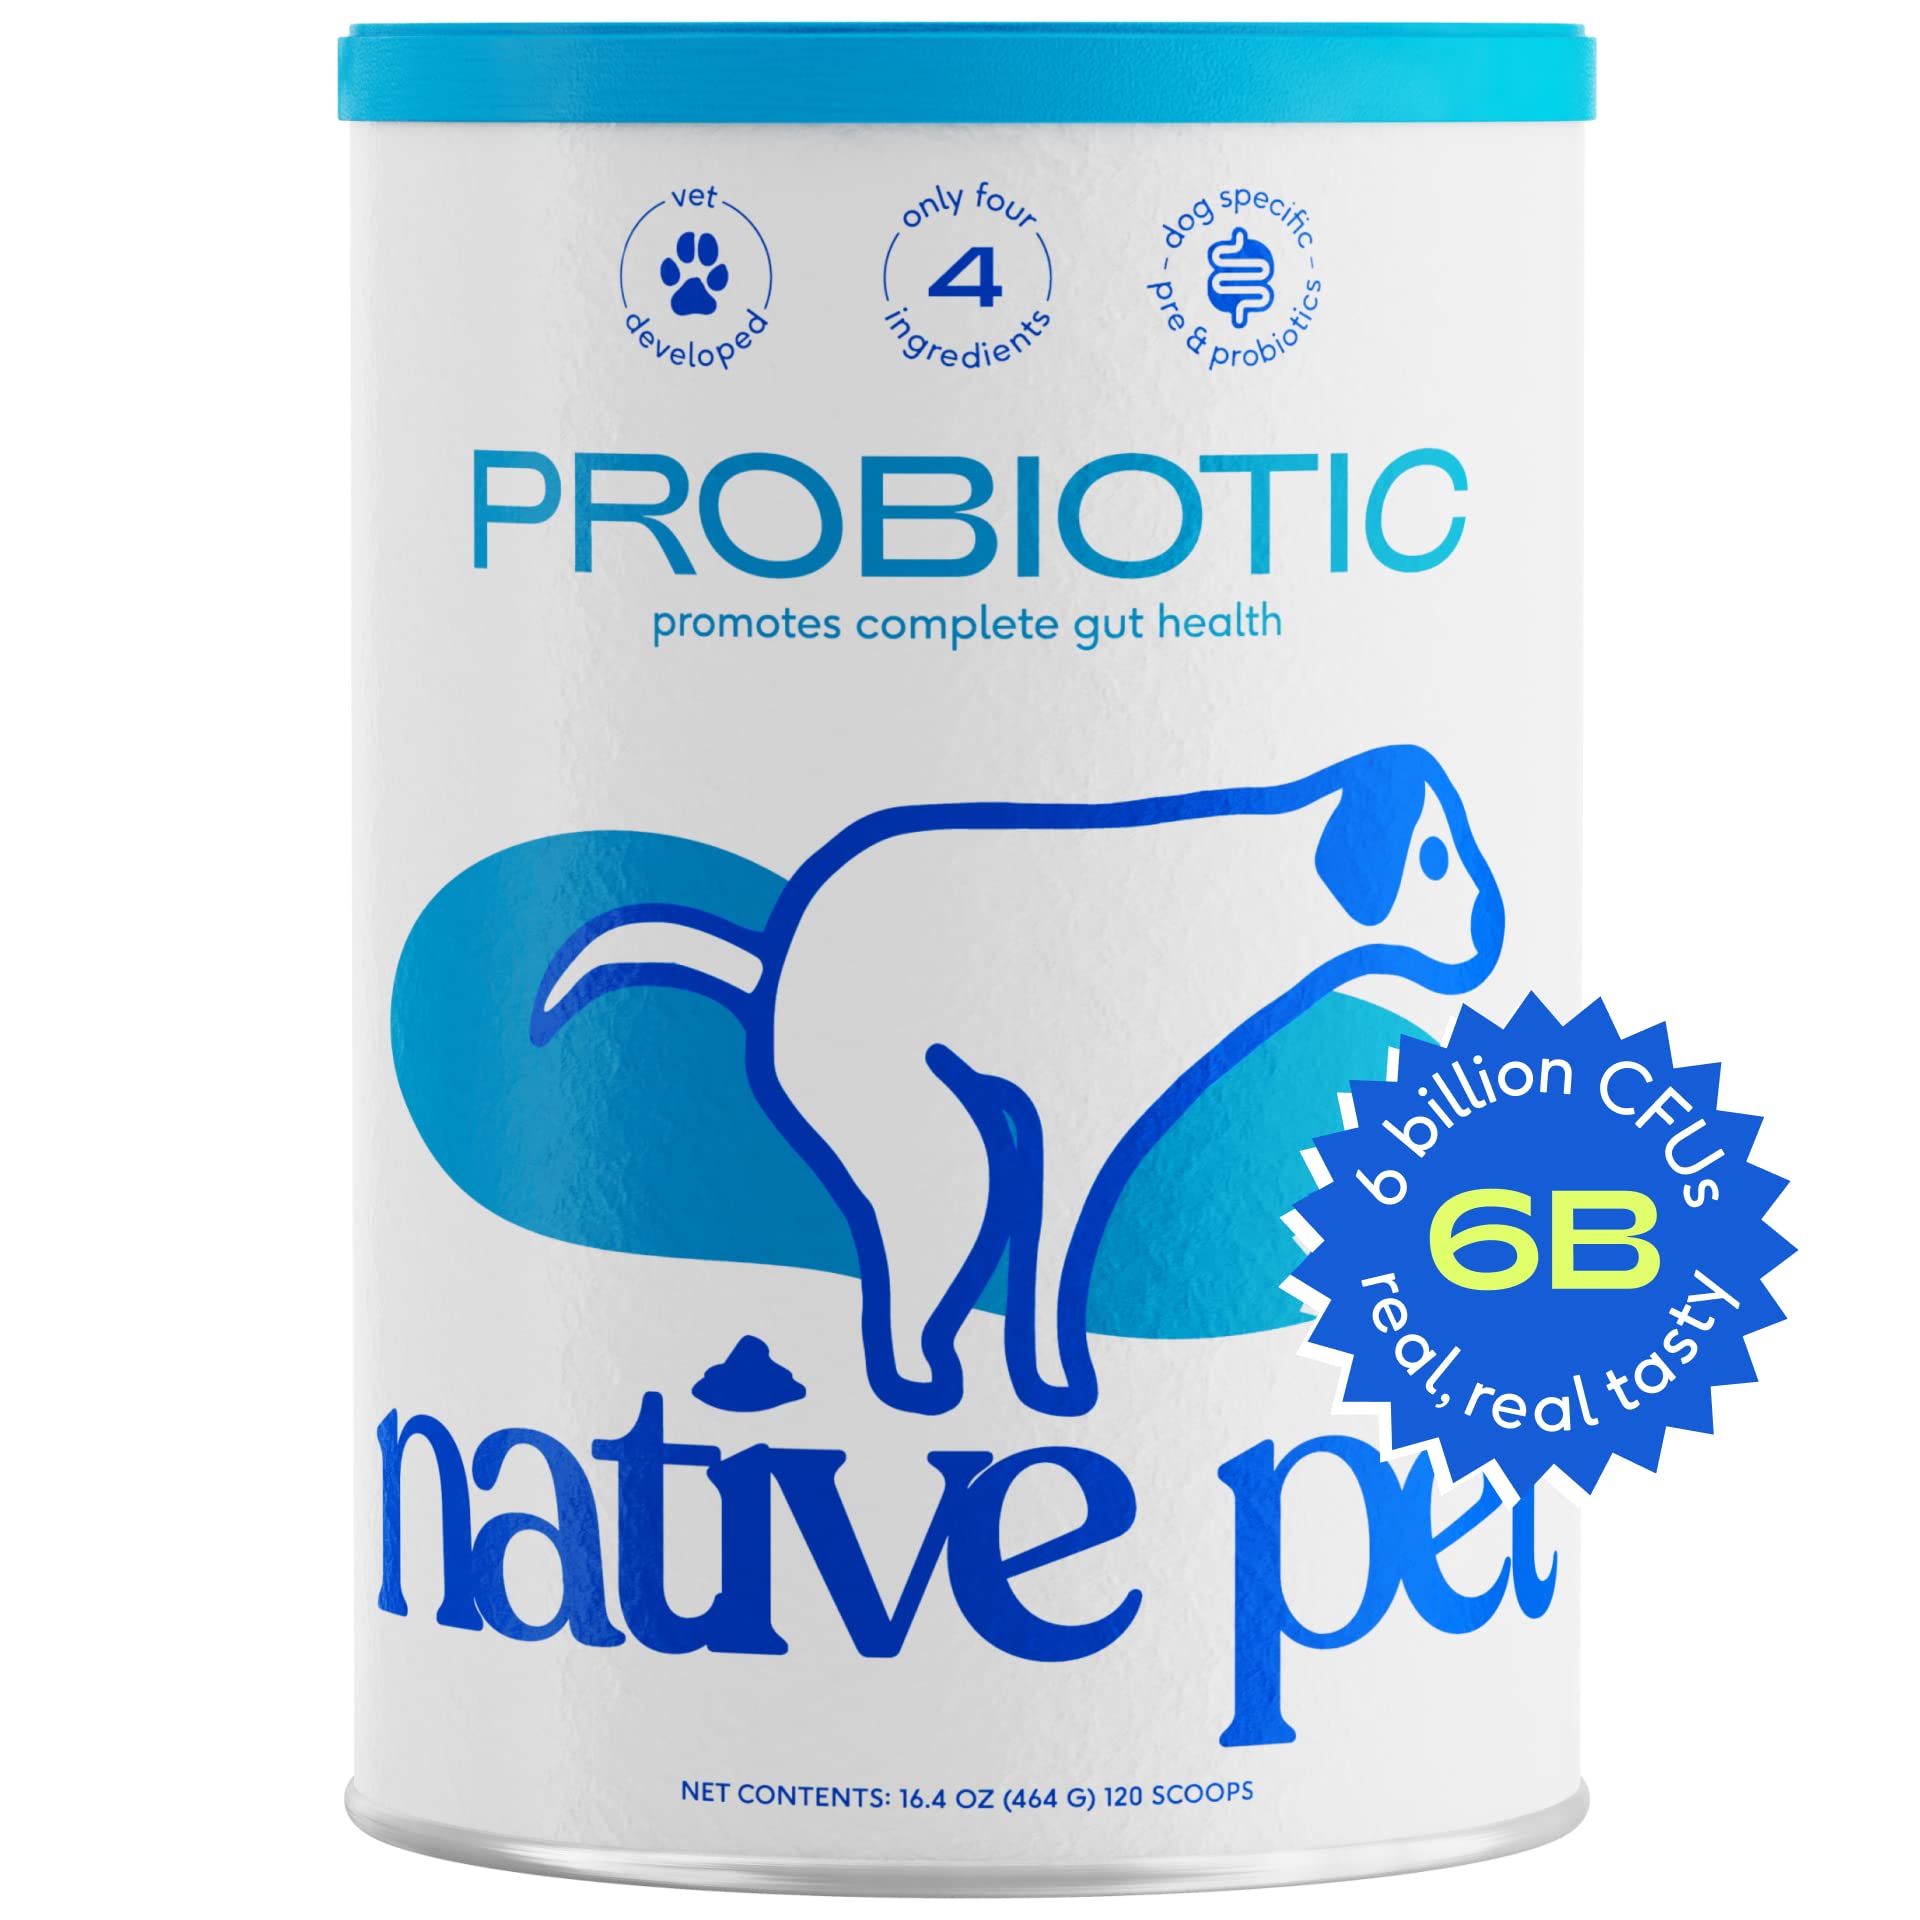 Native Pet Probiotic